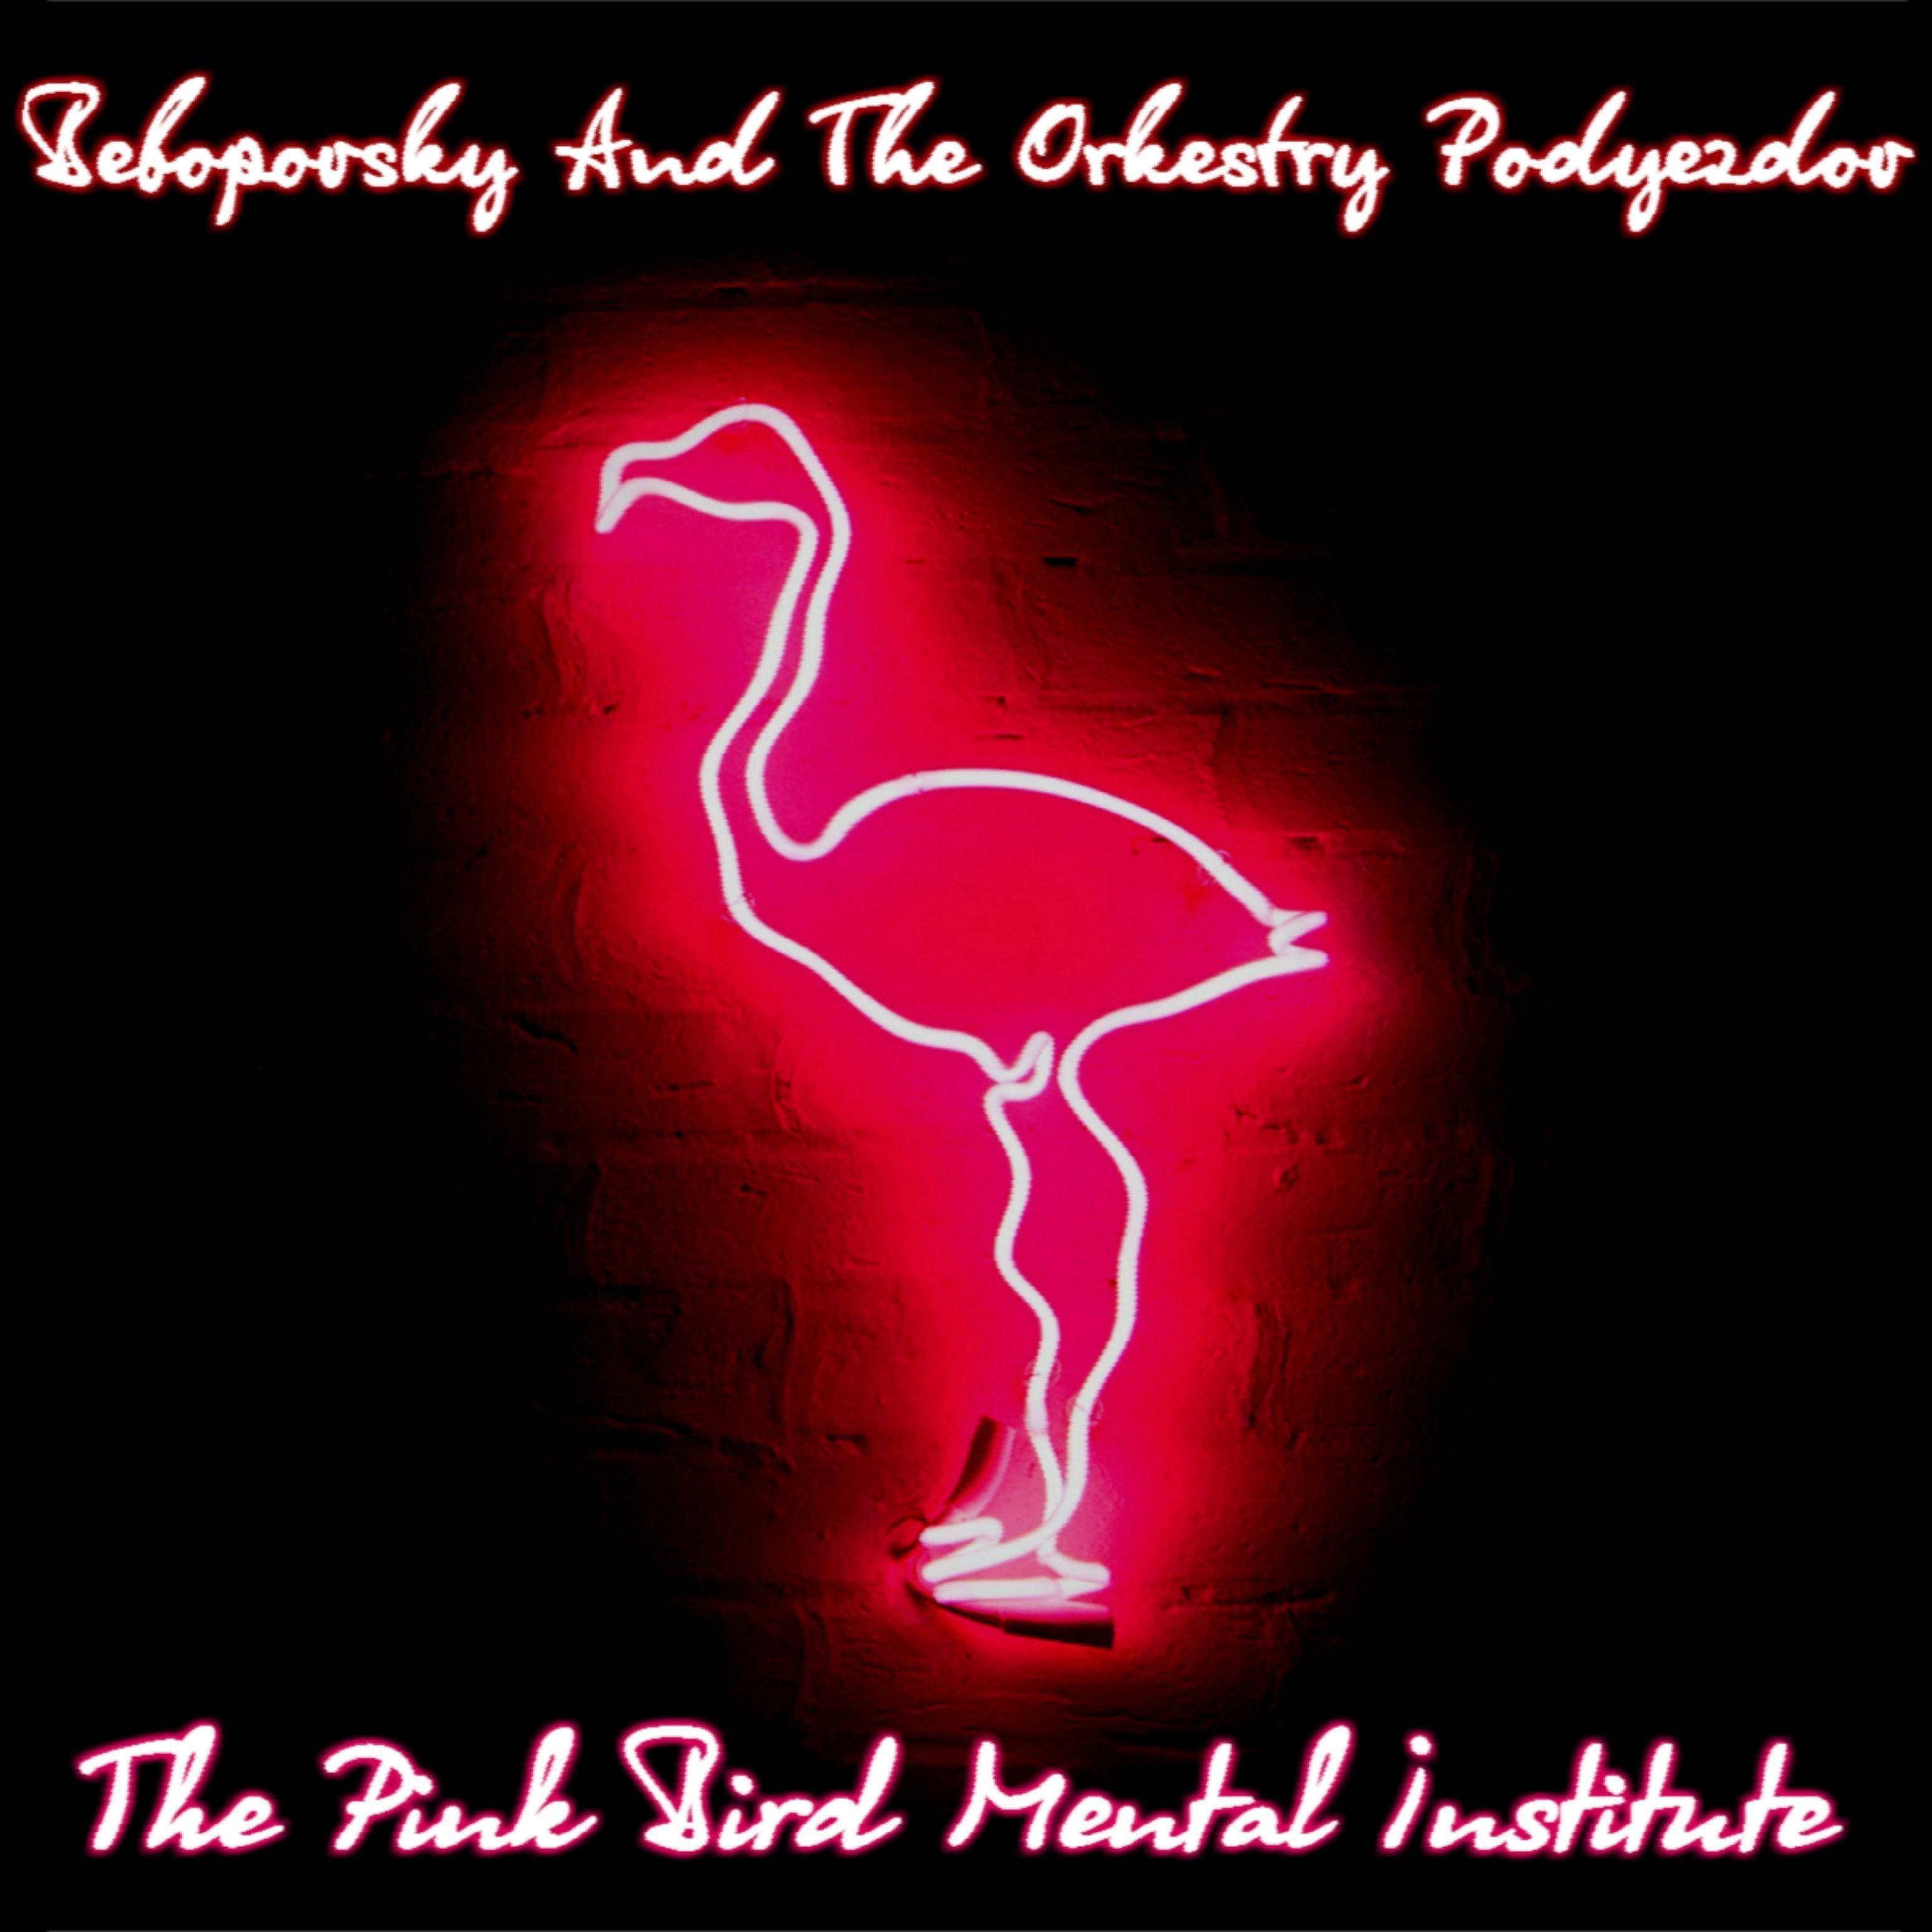 The Pink Bird Mental Institute